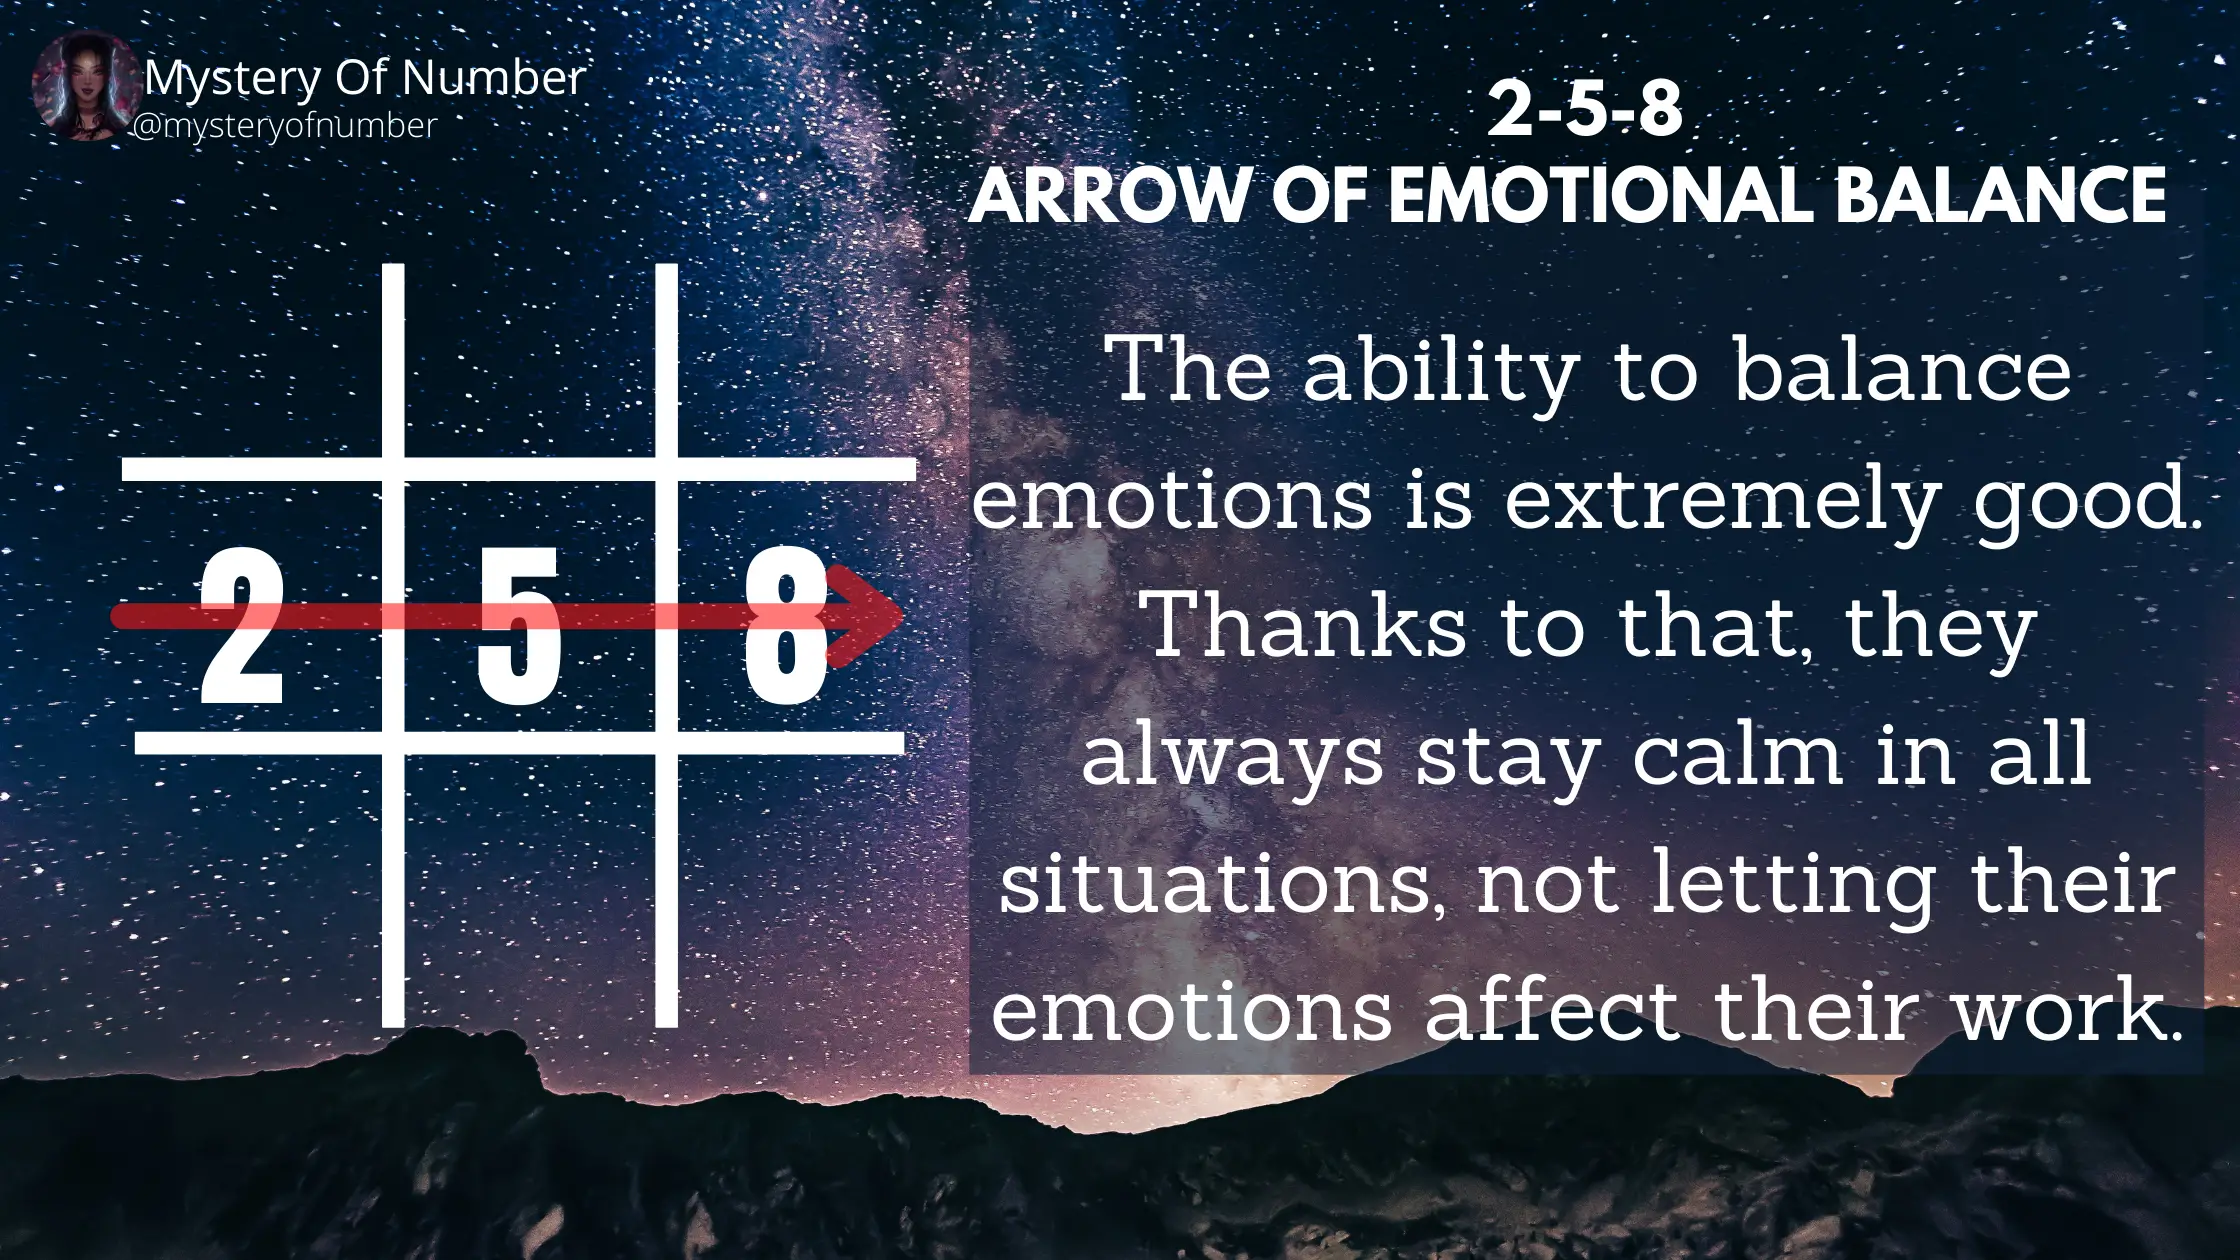 Arrow of emotional balance 2-5-8: Arrows in numerology